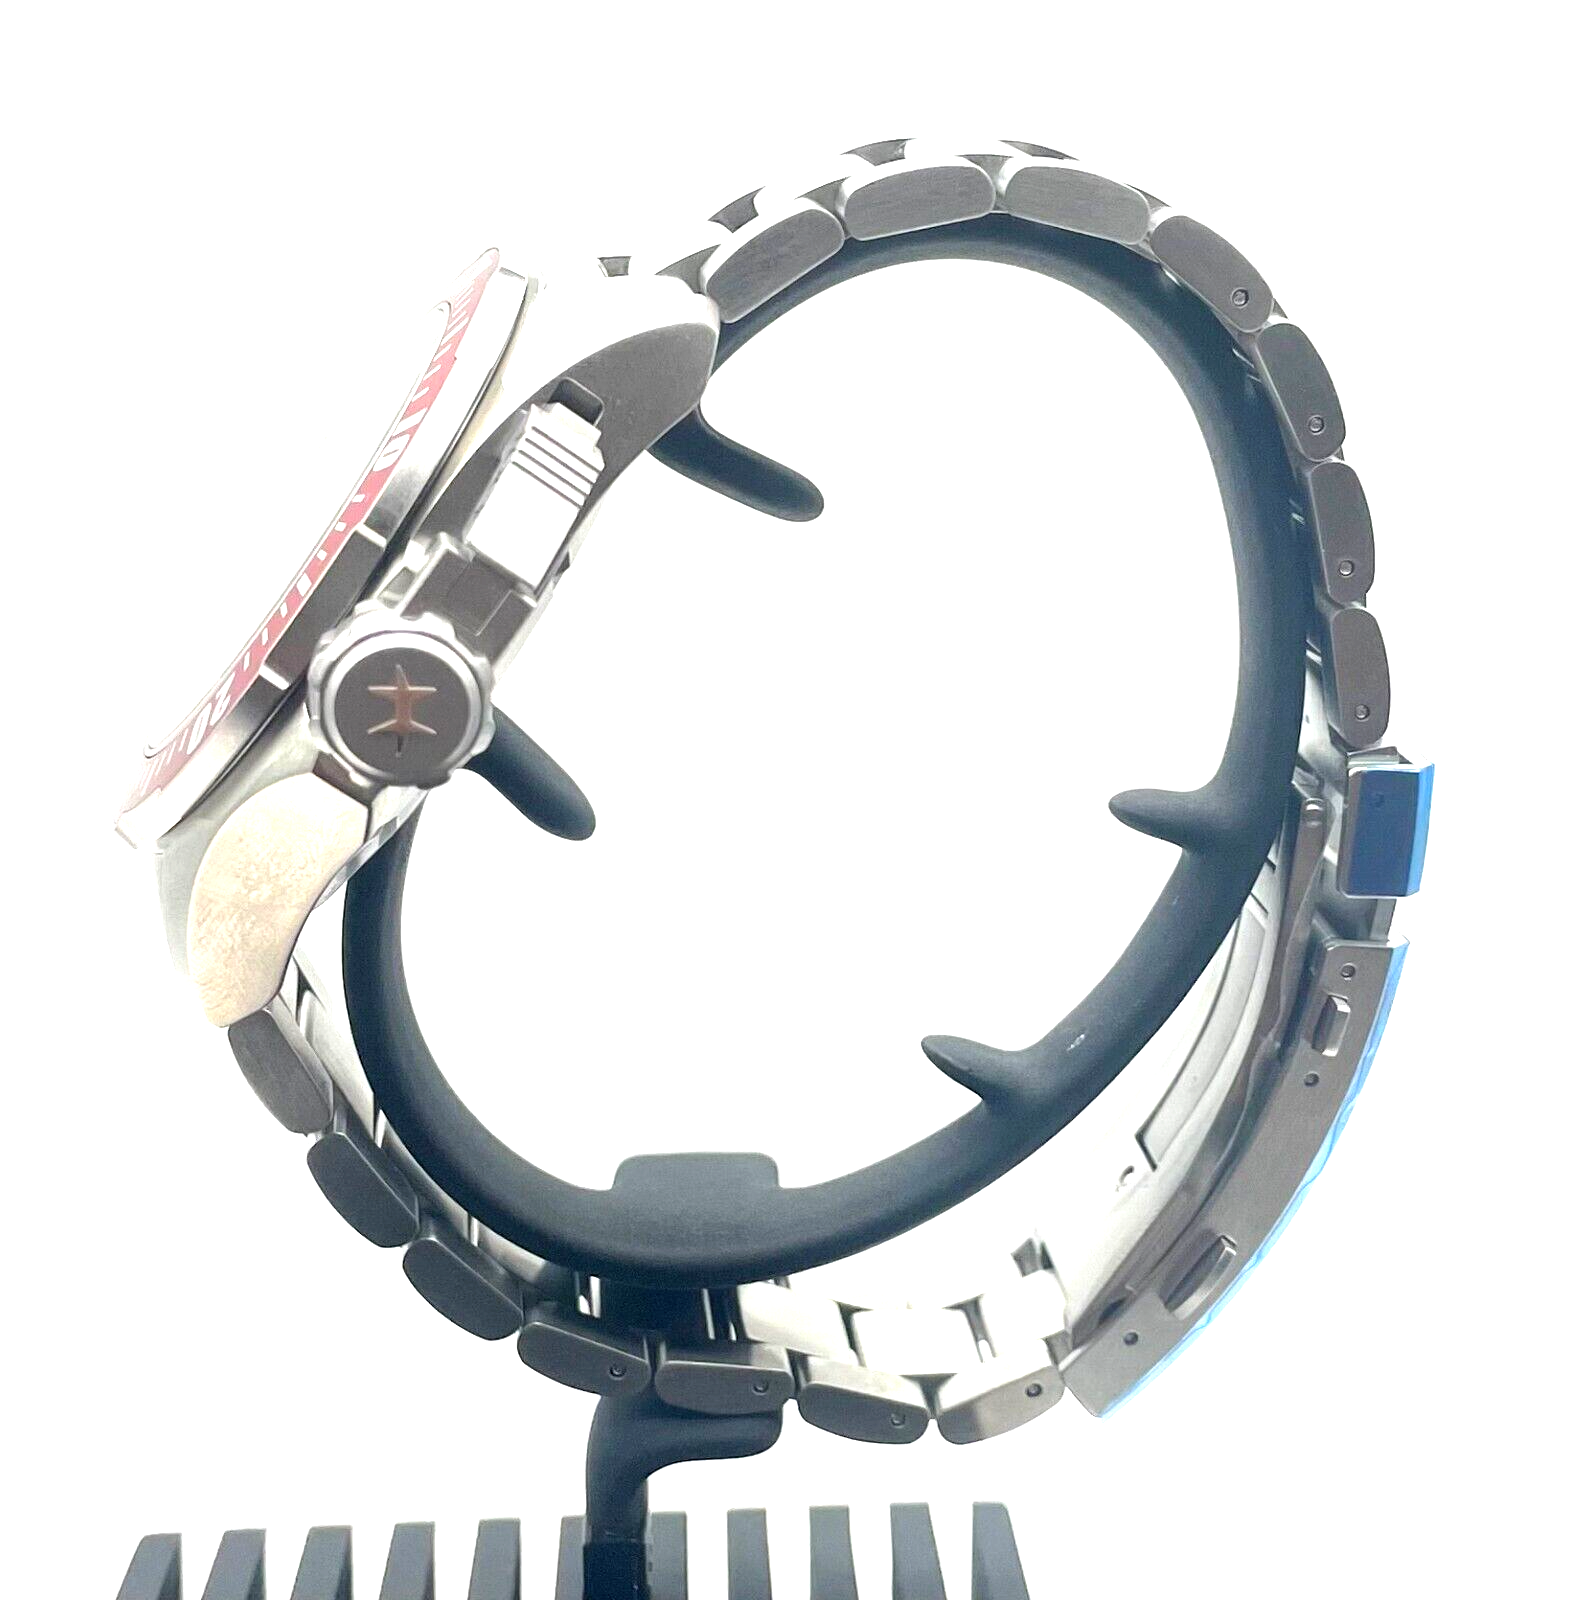 Hamilton Khaki Navy Frogman Automatic Stainless Steel Black Dial Watch H77725135